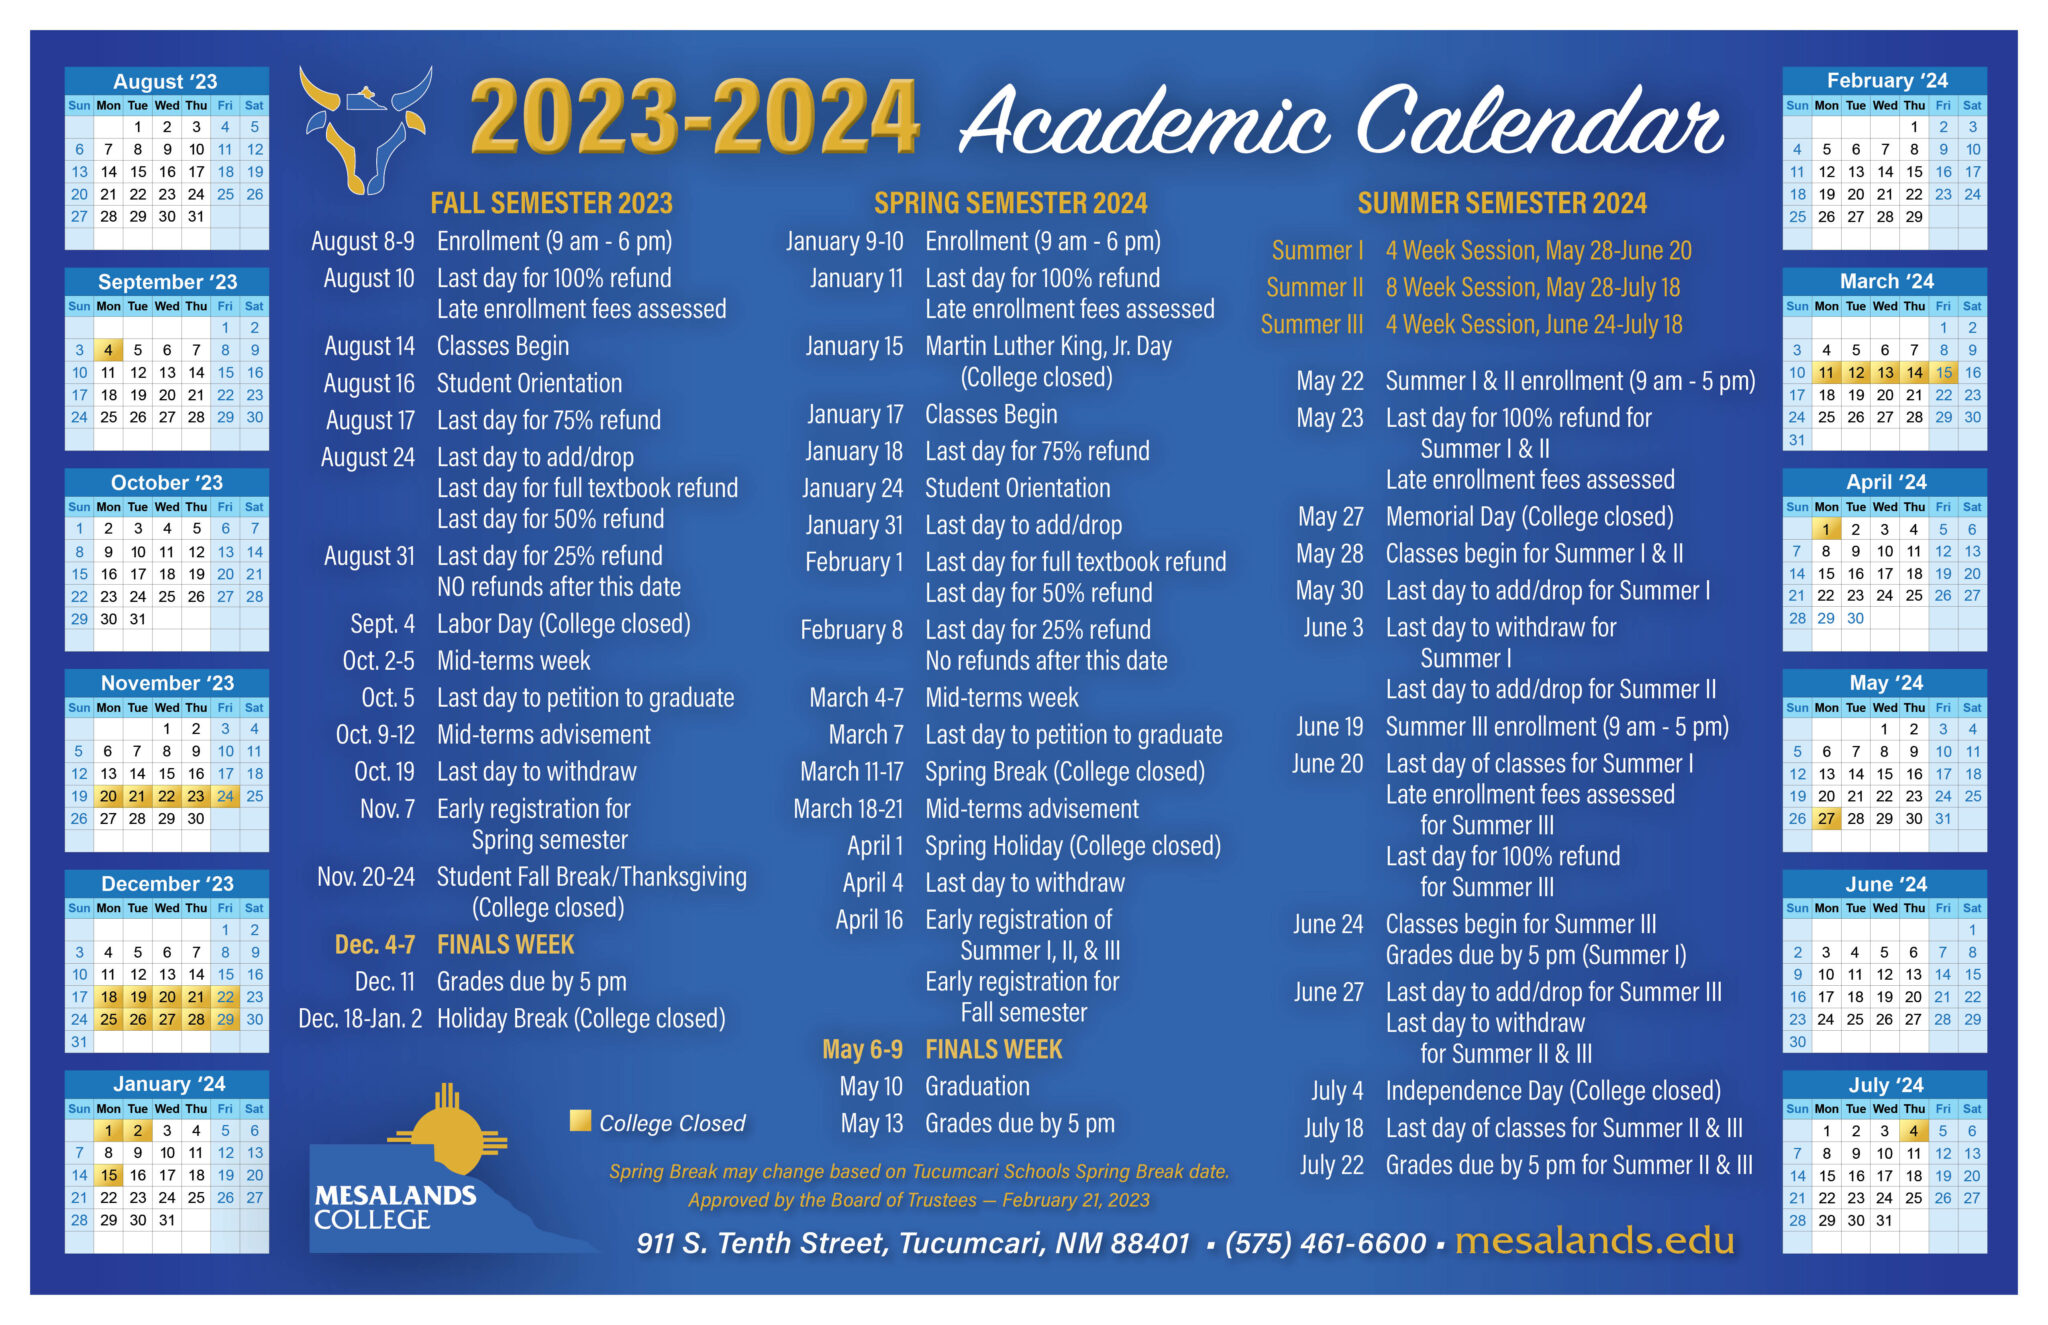 uga-academic-schedule-for-2019-2020